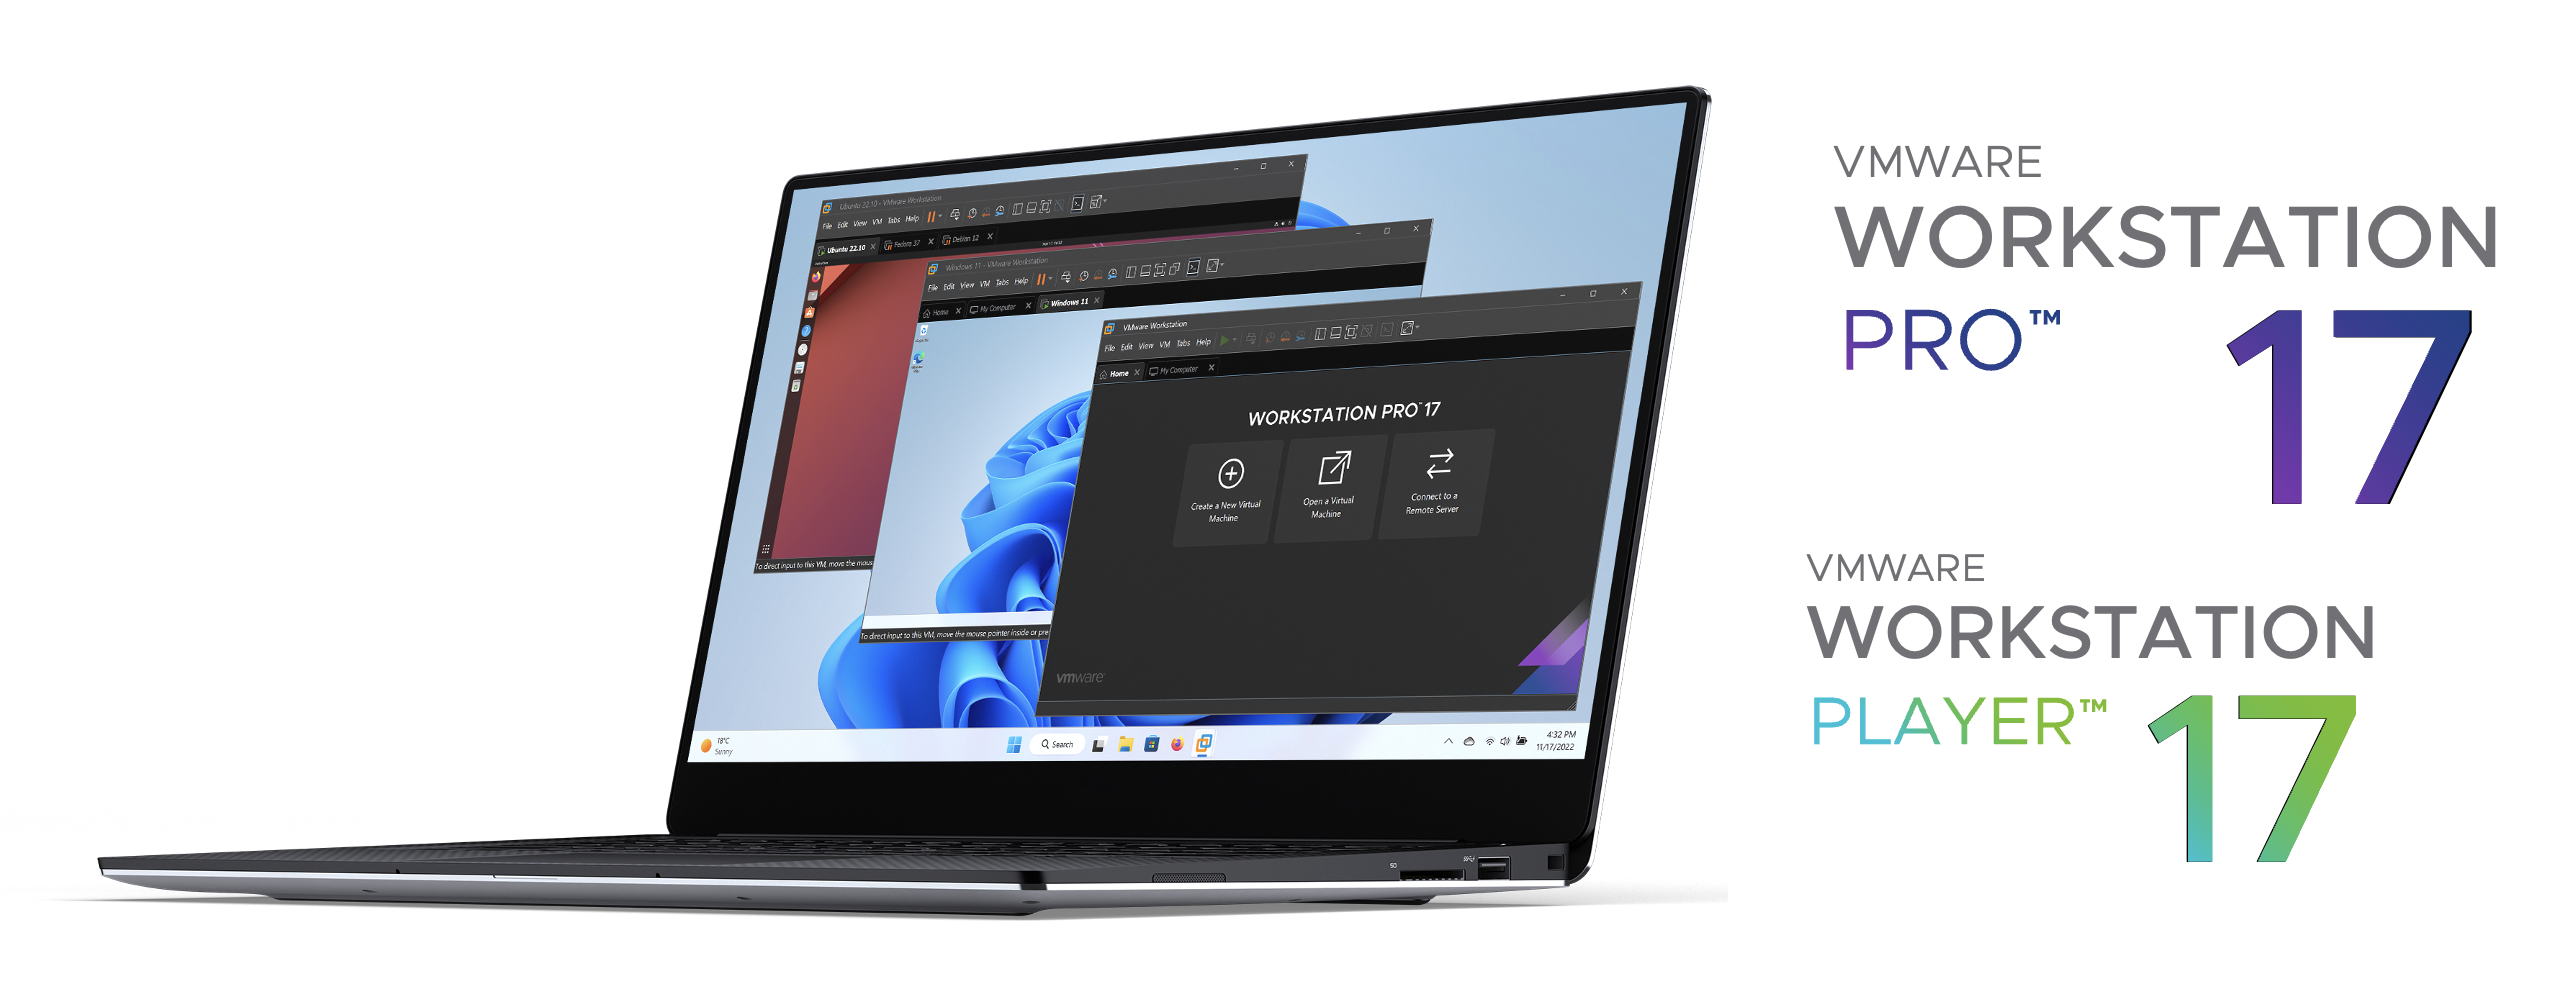 Announcing VMware Workstation 17 Pro and Player - VMware Workstation Zealot